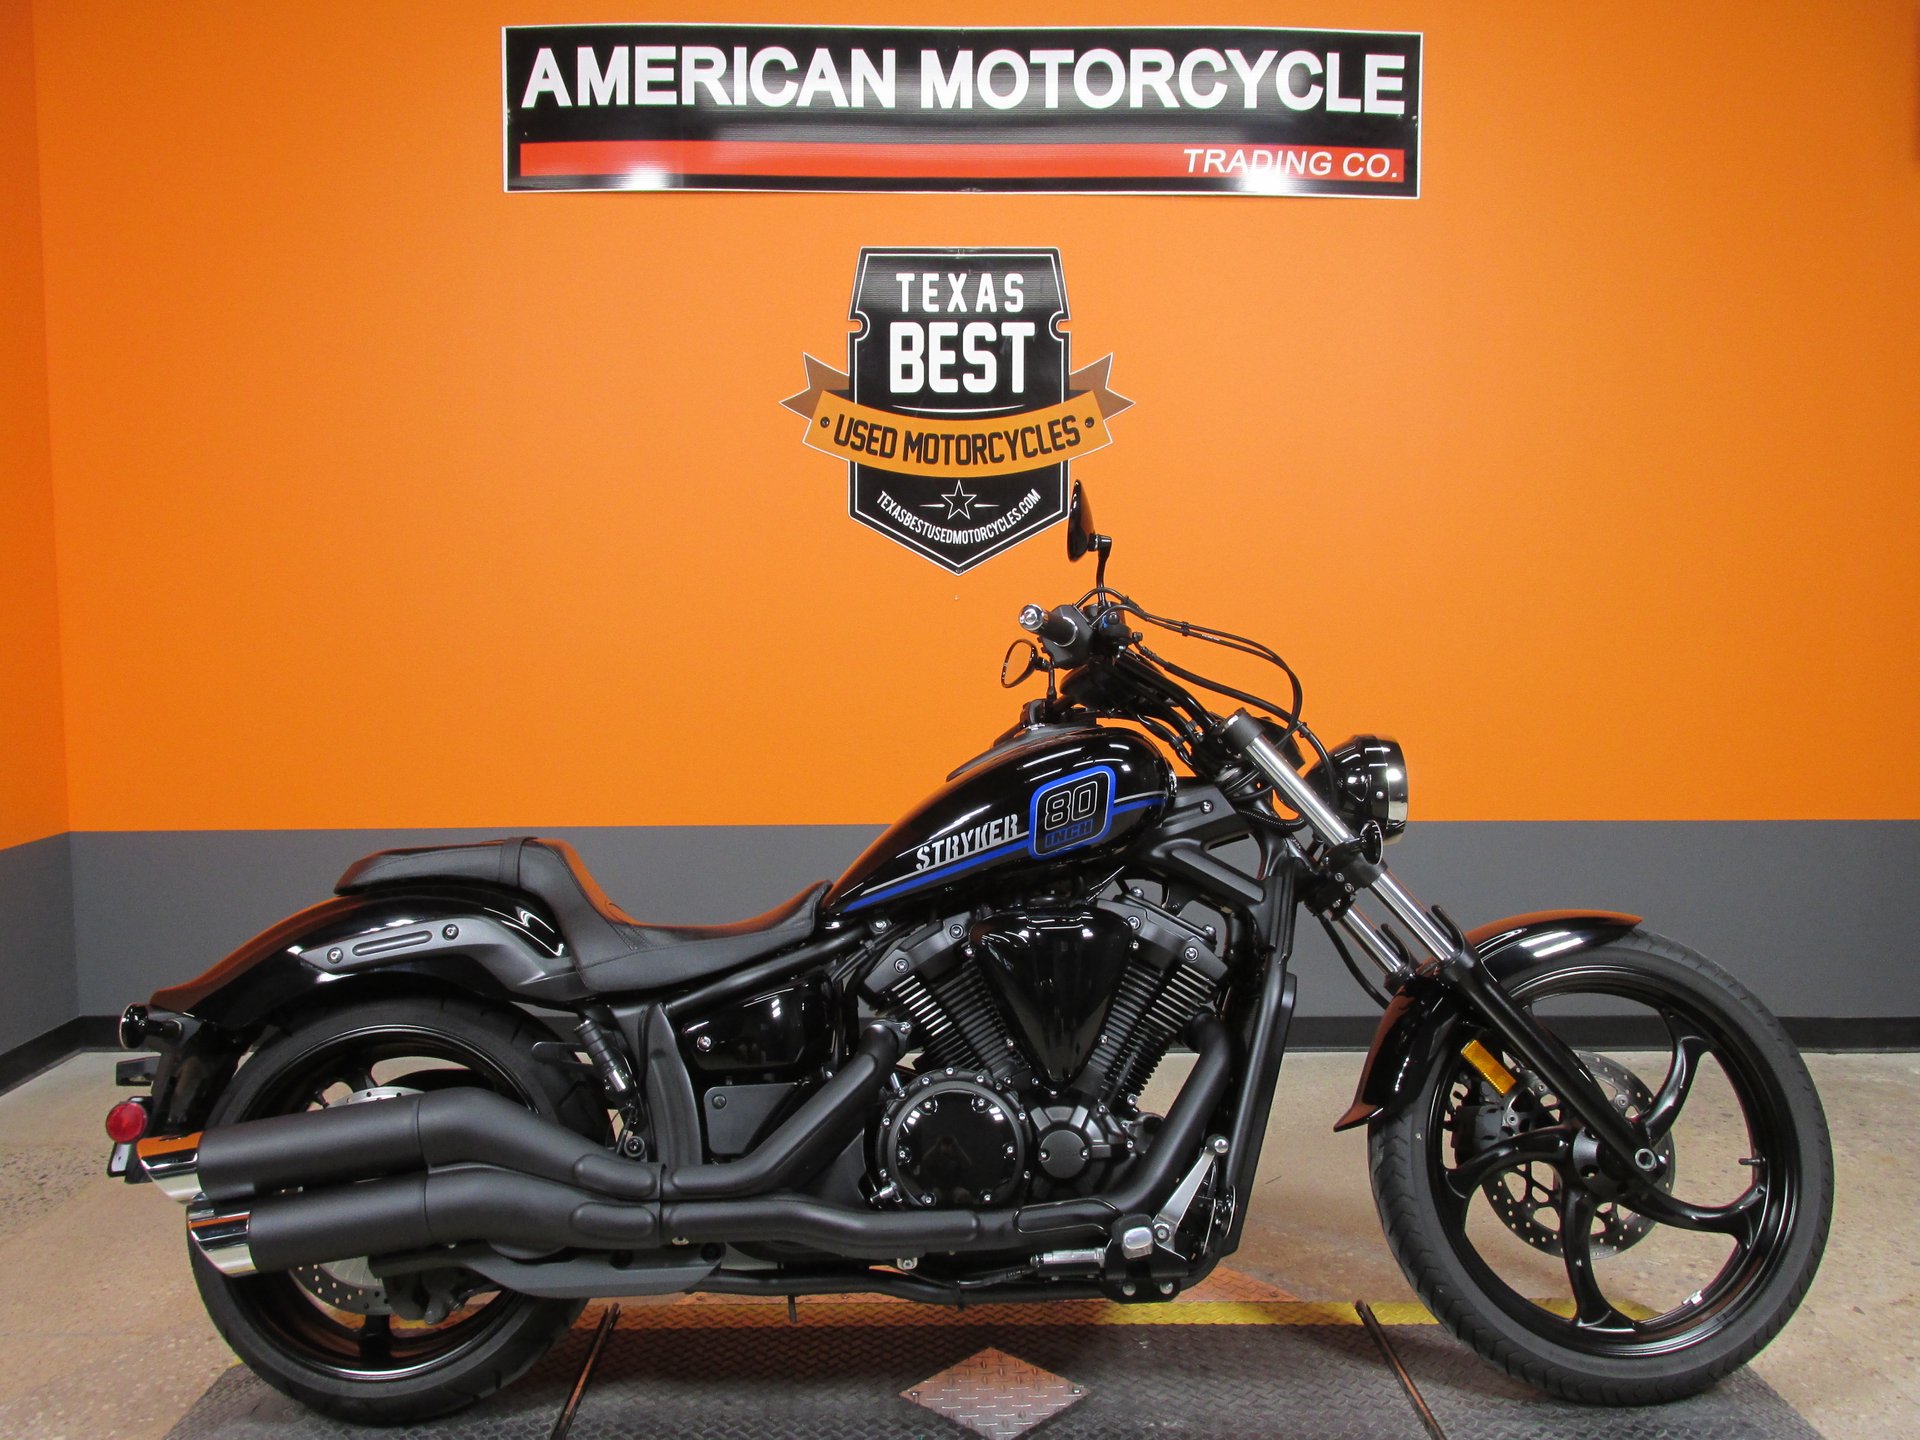 2017 Yamaha Stryker | American Motorcycle Trading Company - Used Harley ...